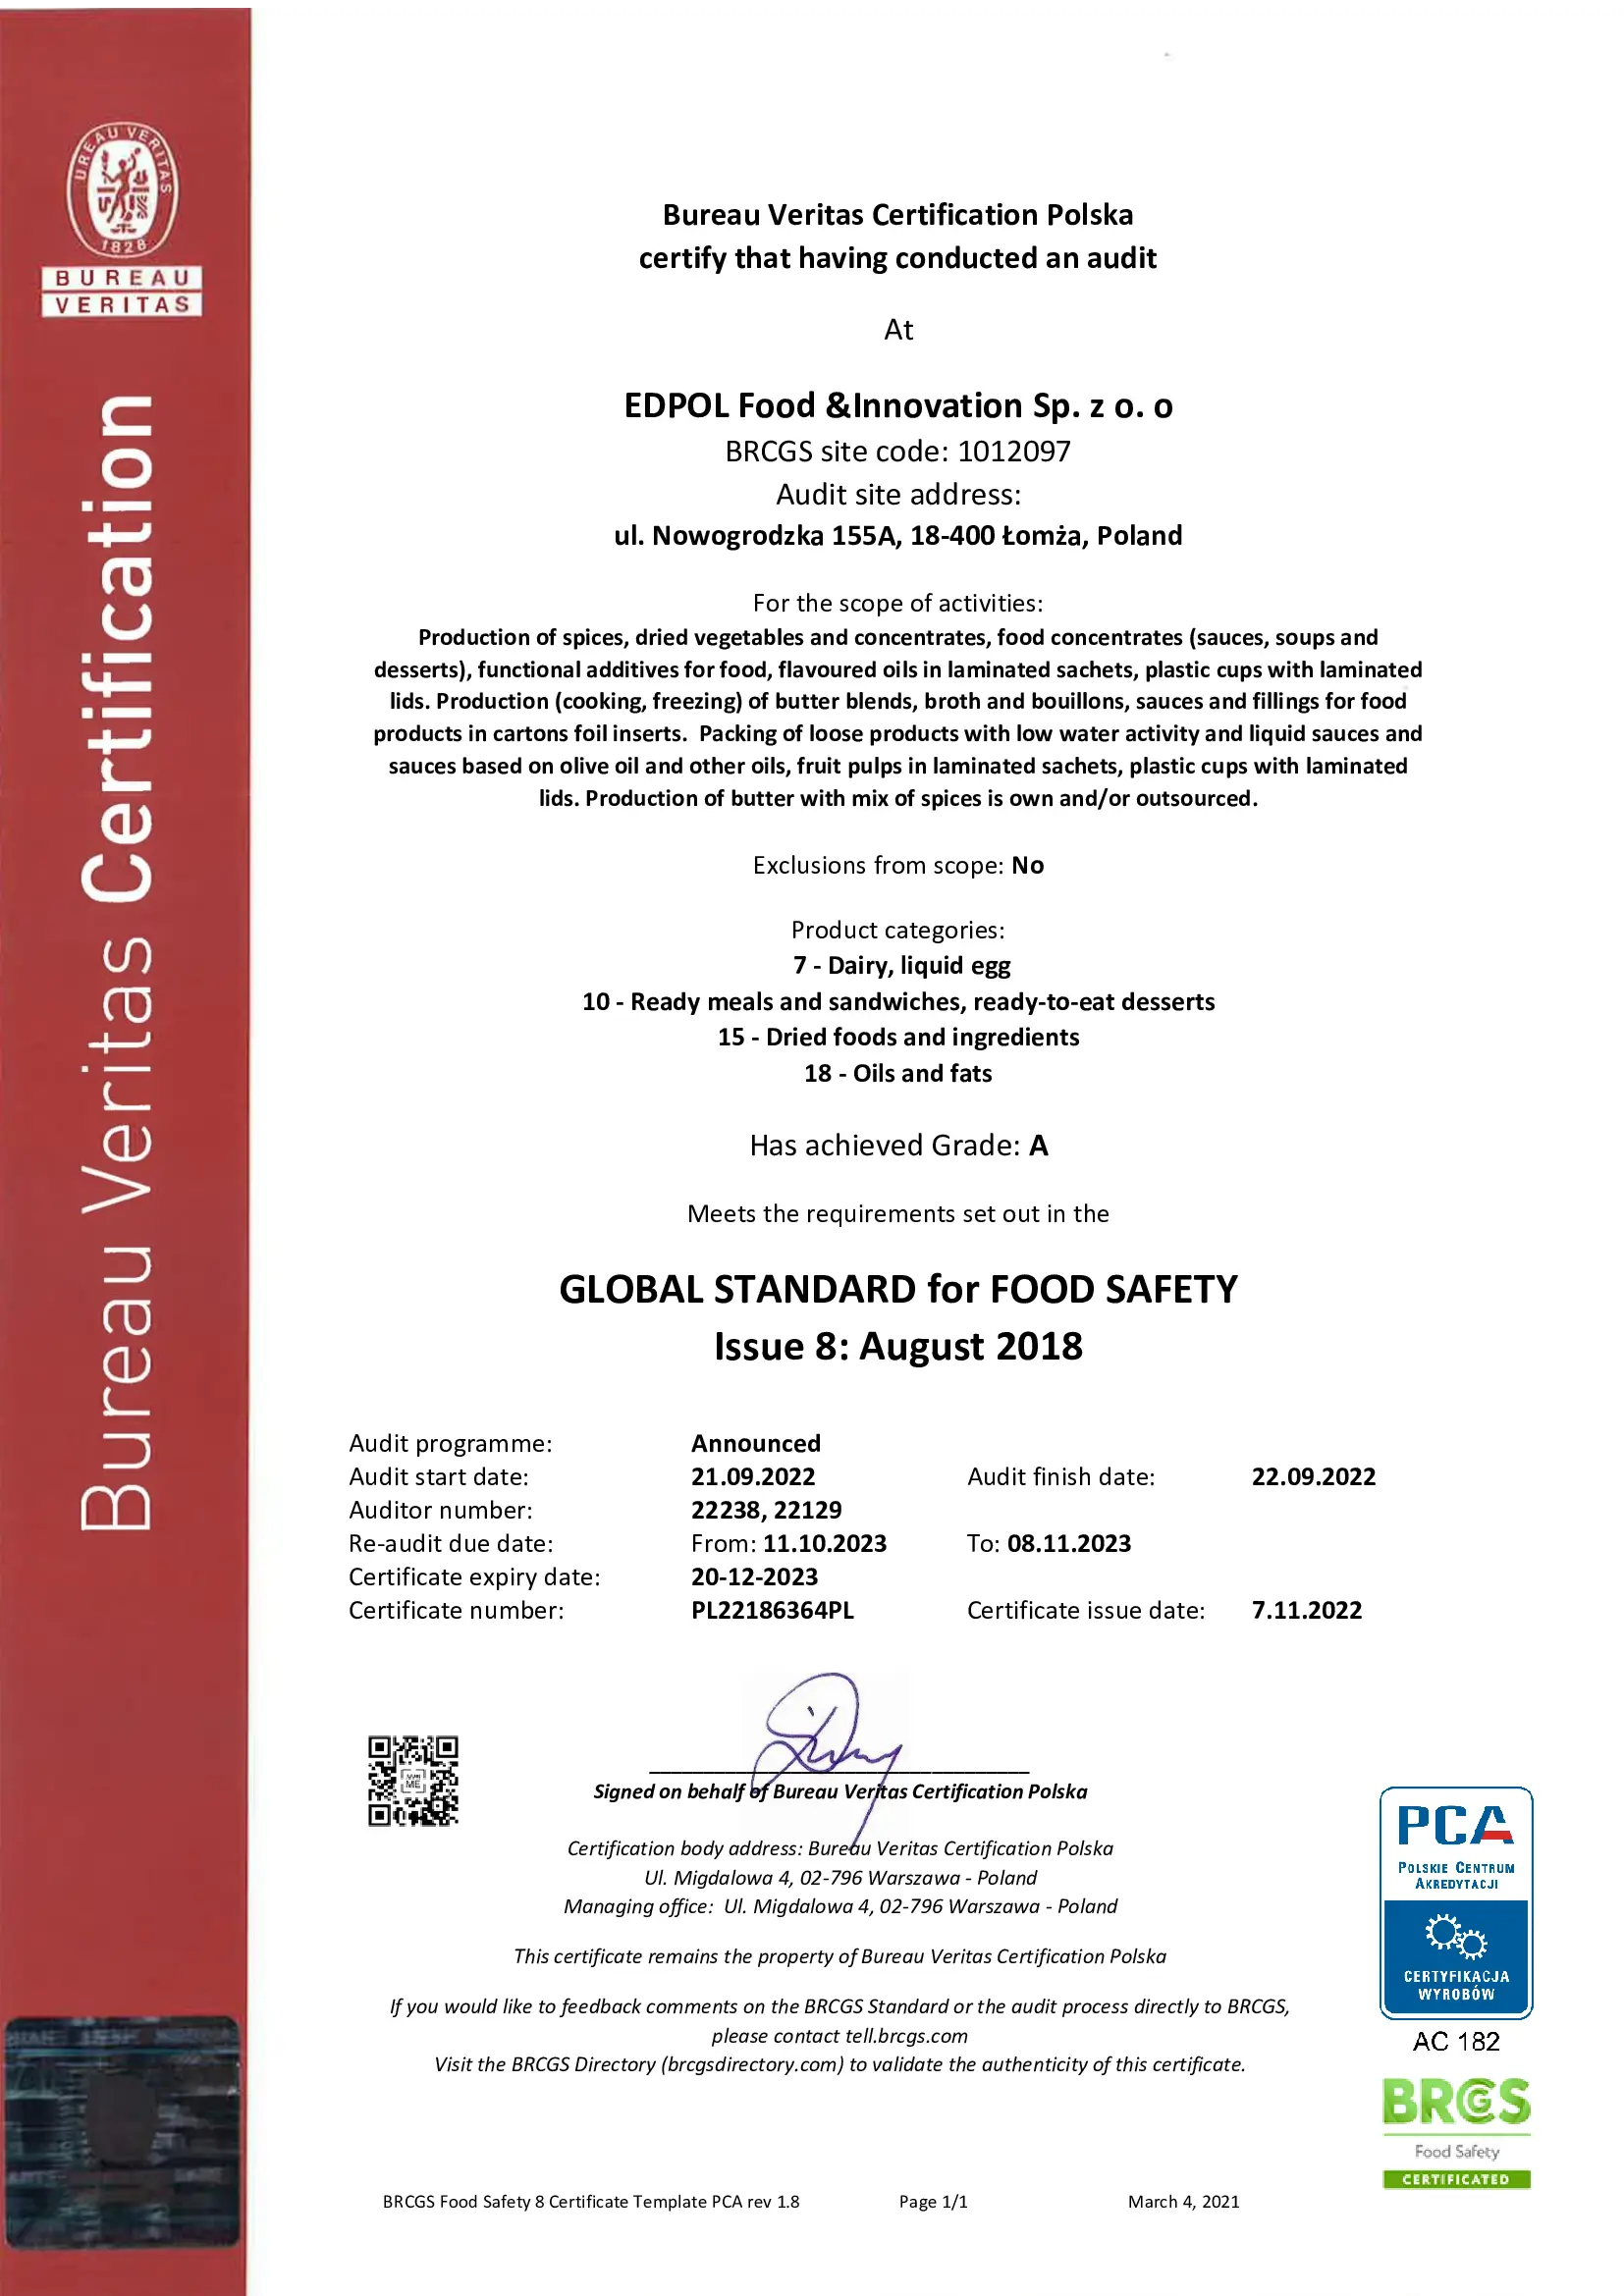 edpol brcgs certificate